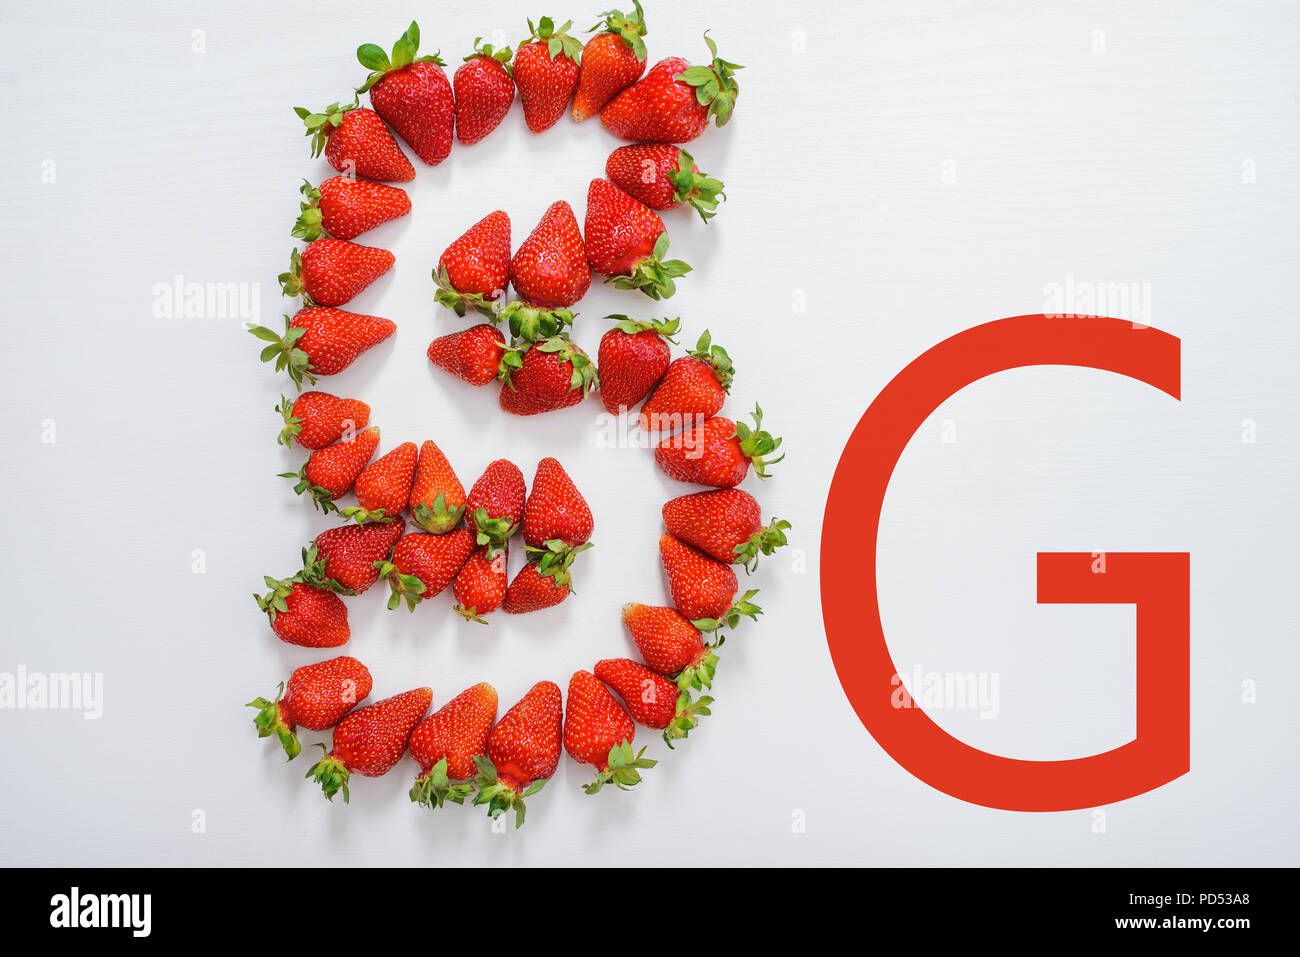 emblem 5g made up of fresh strawberries. Stock Photo